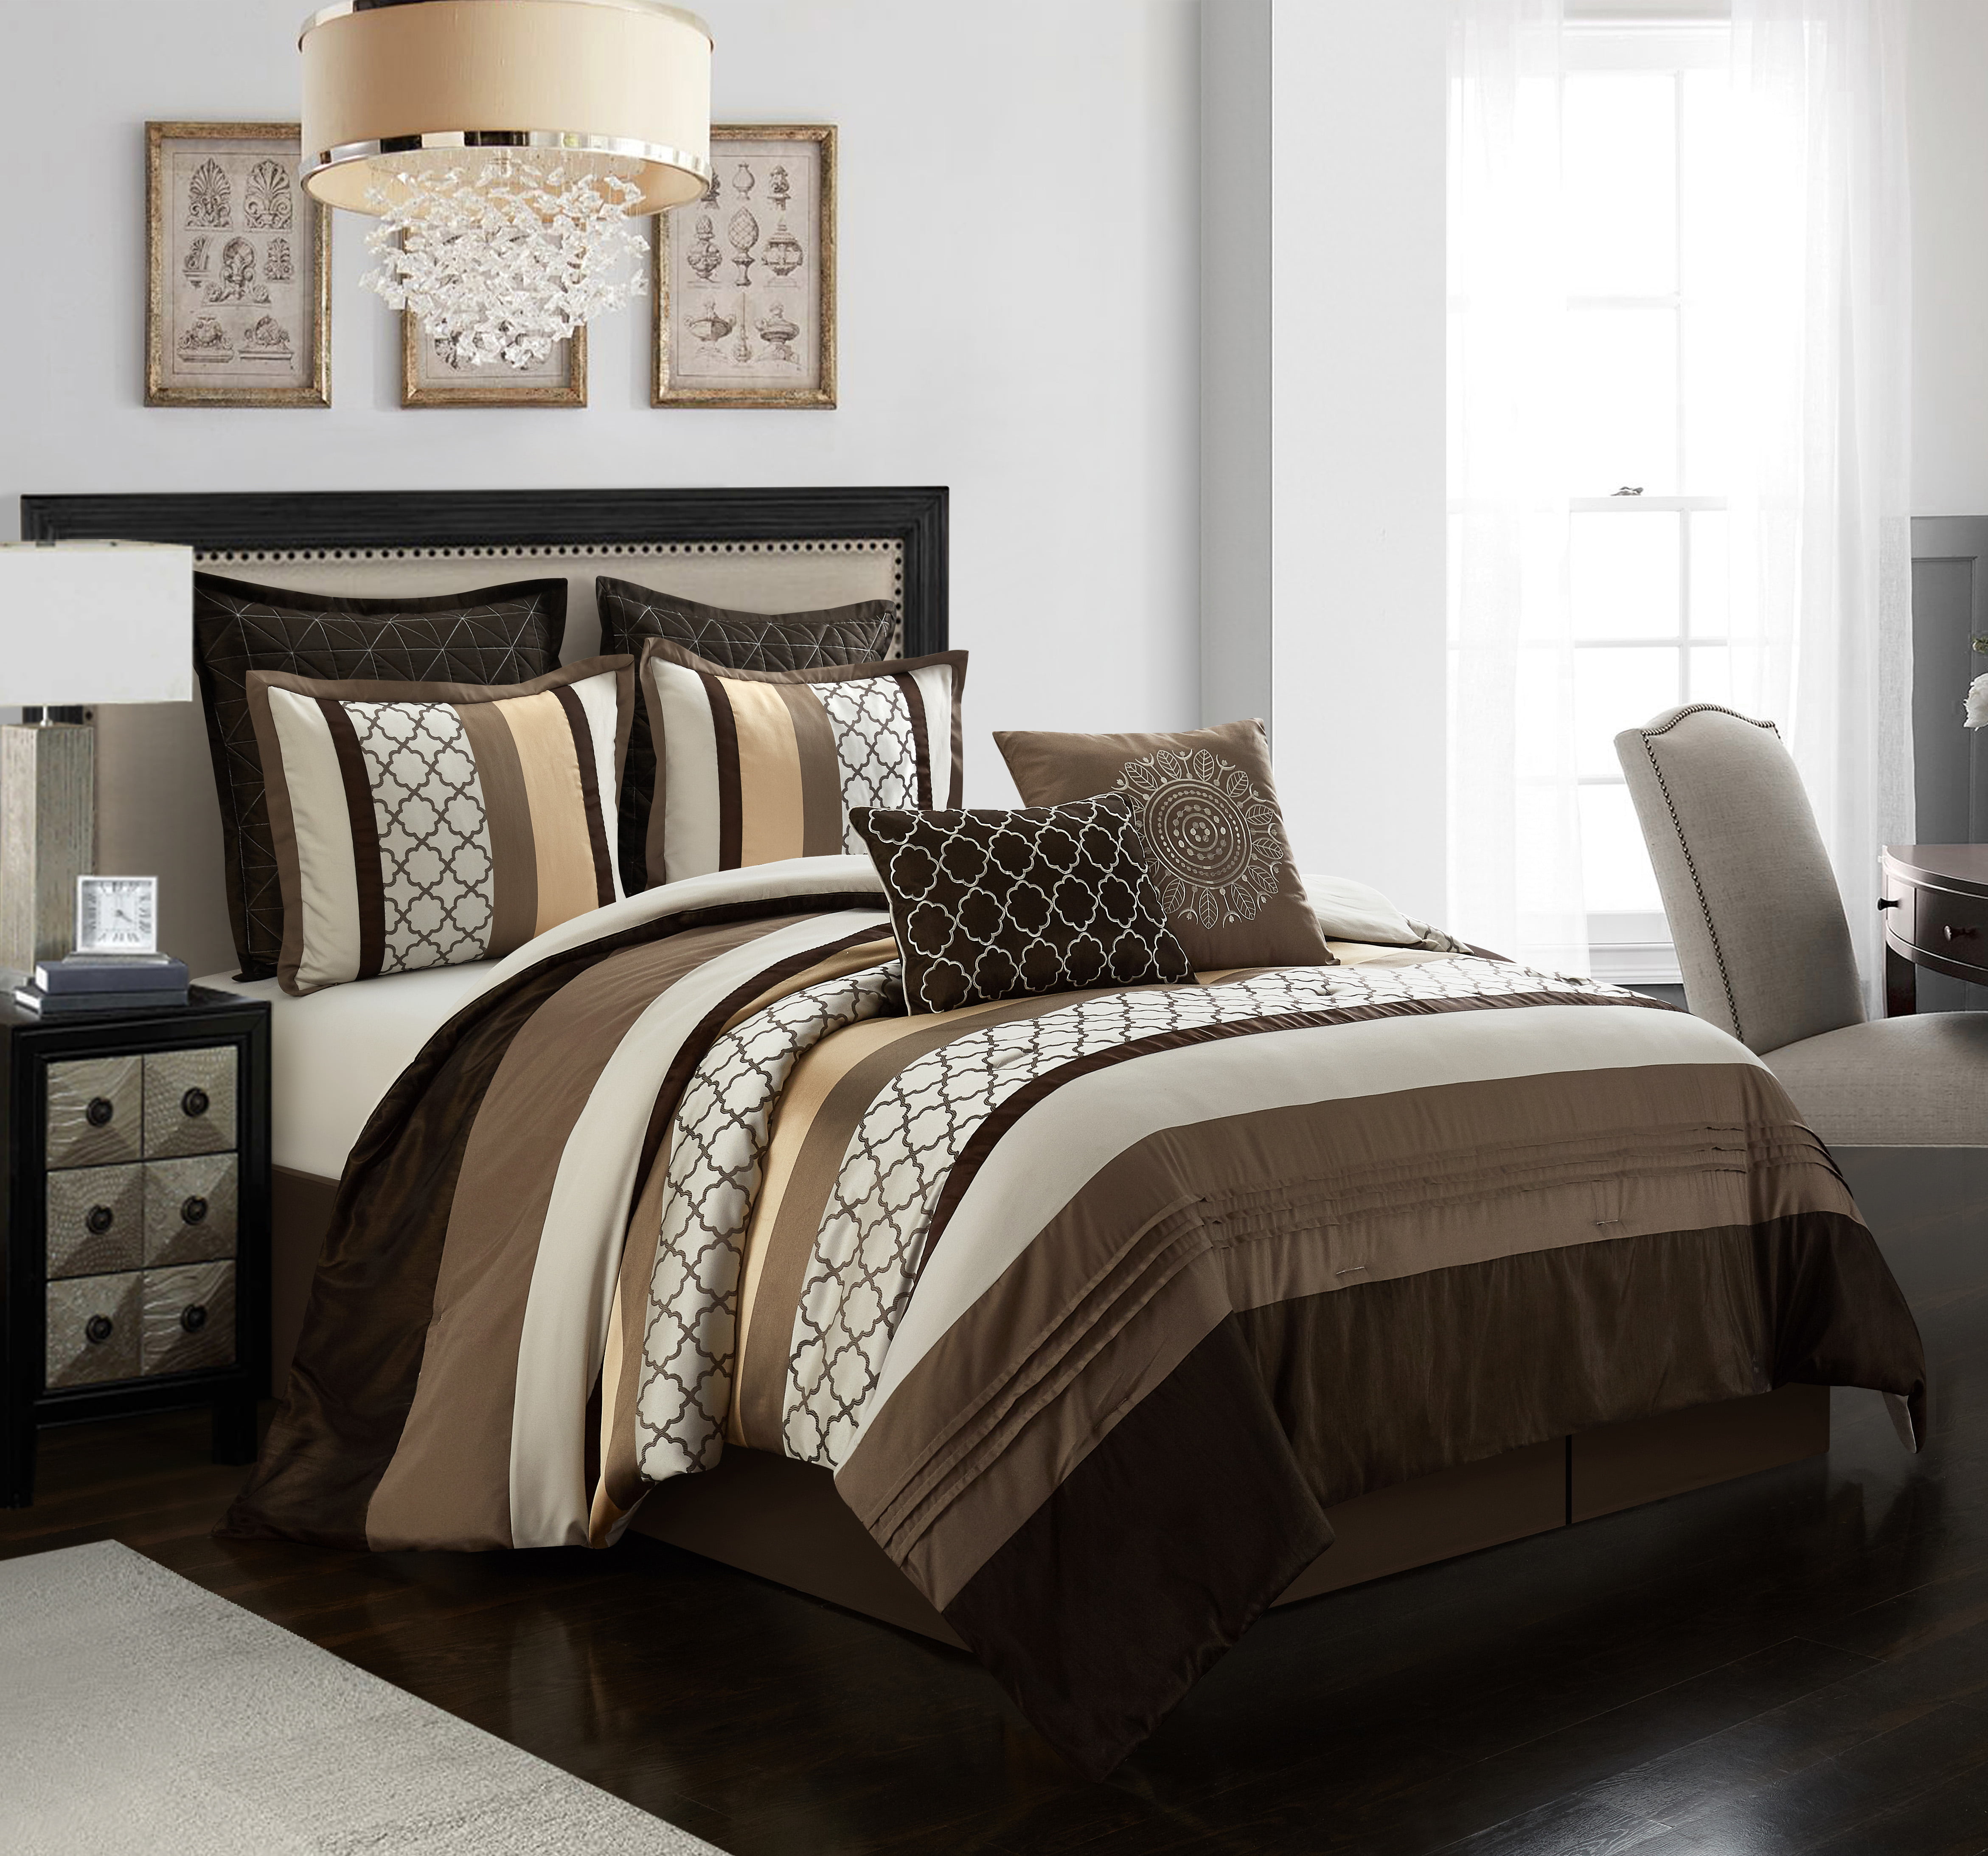 Nanshing Avalon 8 Piece Bedding Comforter Set With Bonus Shams And 2 Bonus Pillows Full Queen